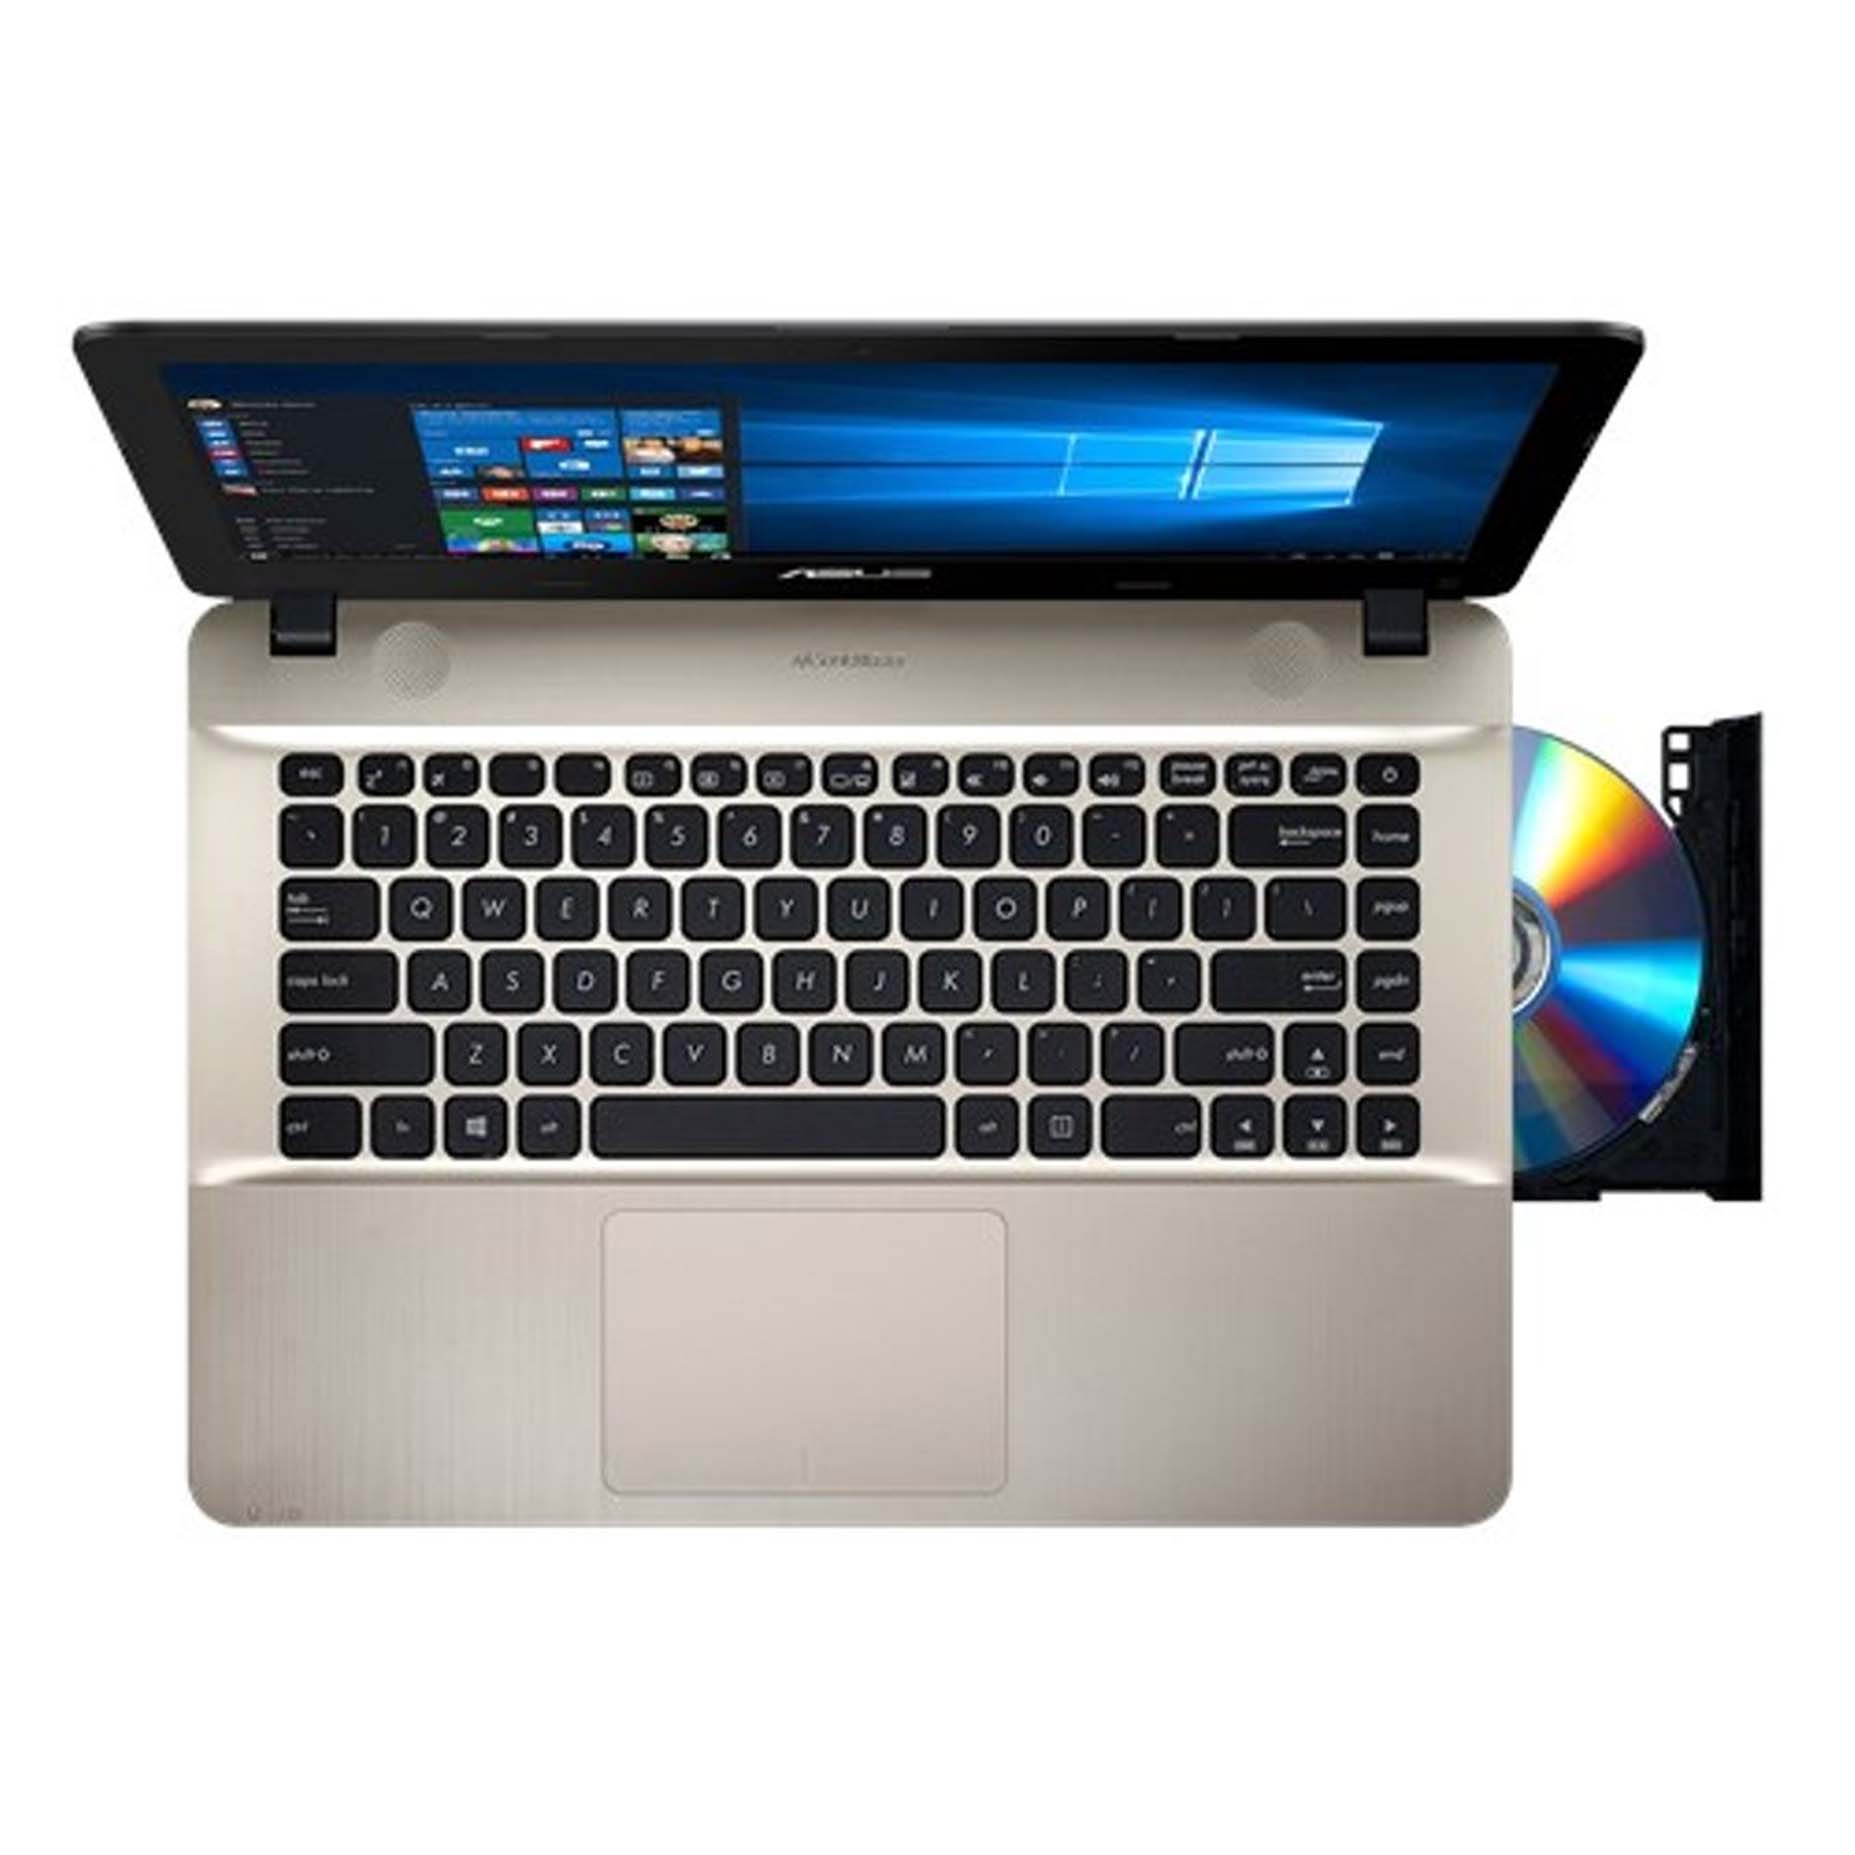 Harga Asus Notebook X441MA-GA011T Black Intel Celeron N4000 4GB 1TB 14 inch Win 10